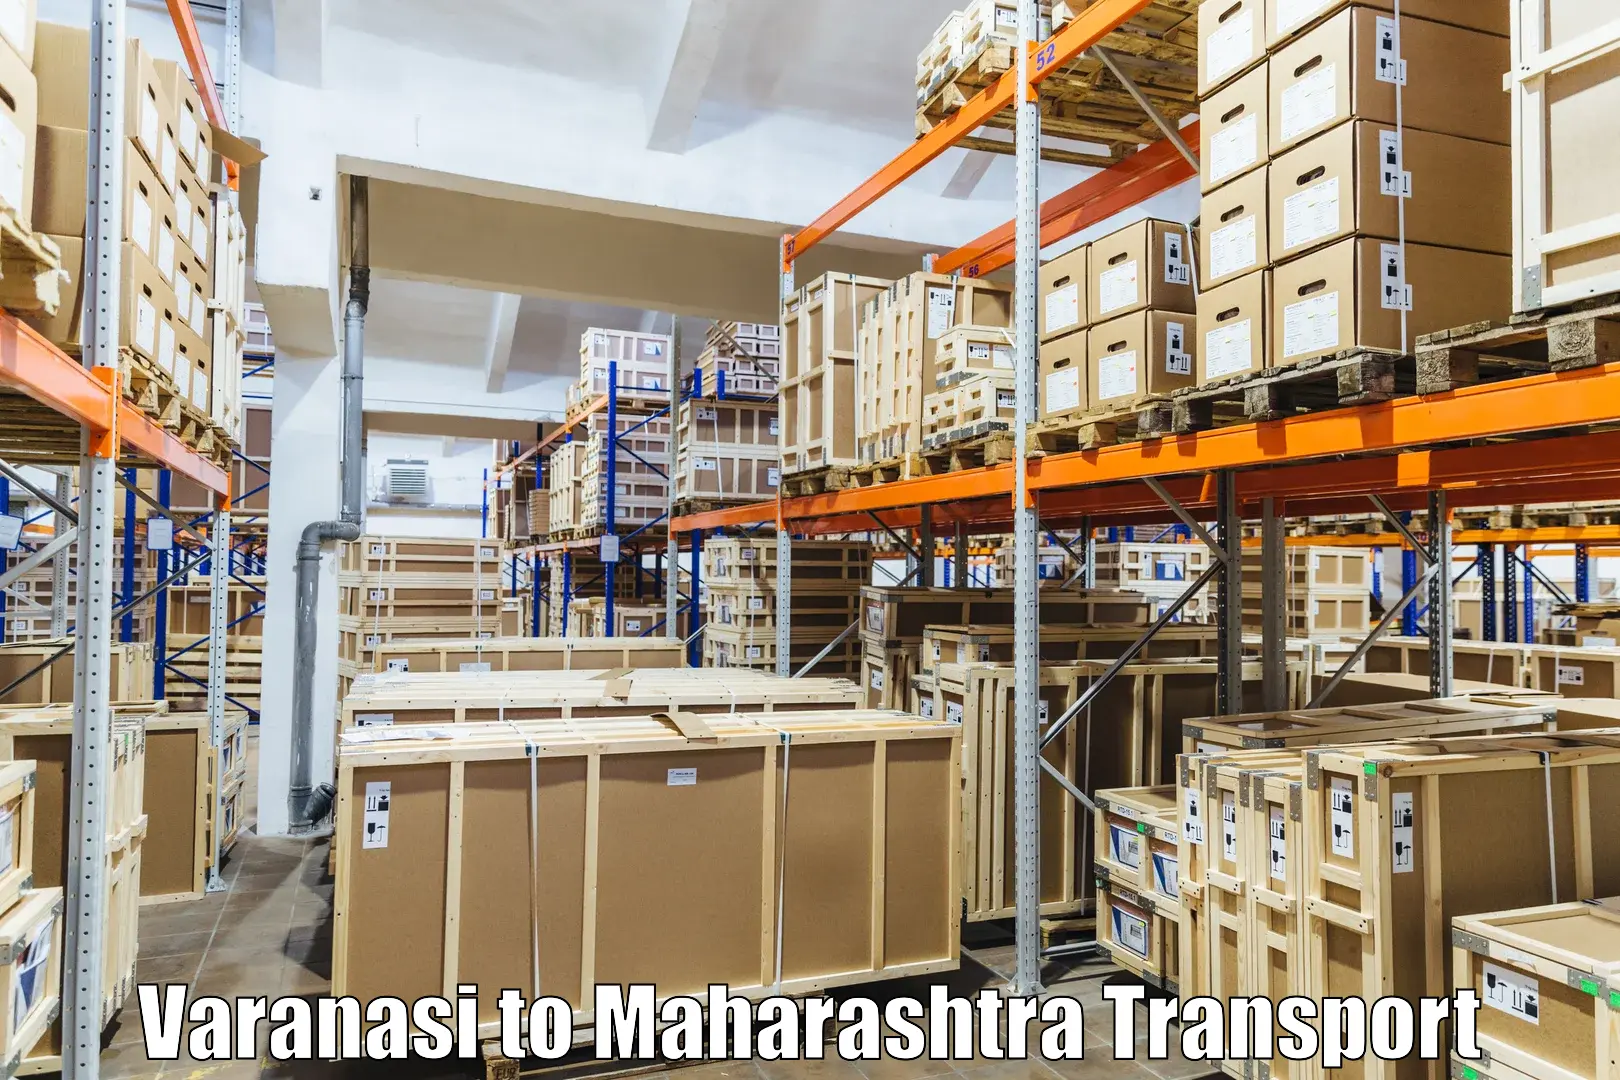 Vehicle transport services in Varanasi to Sironcha